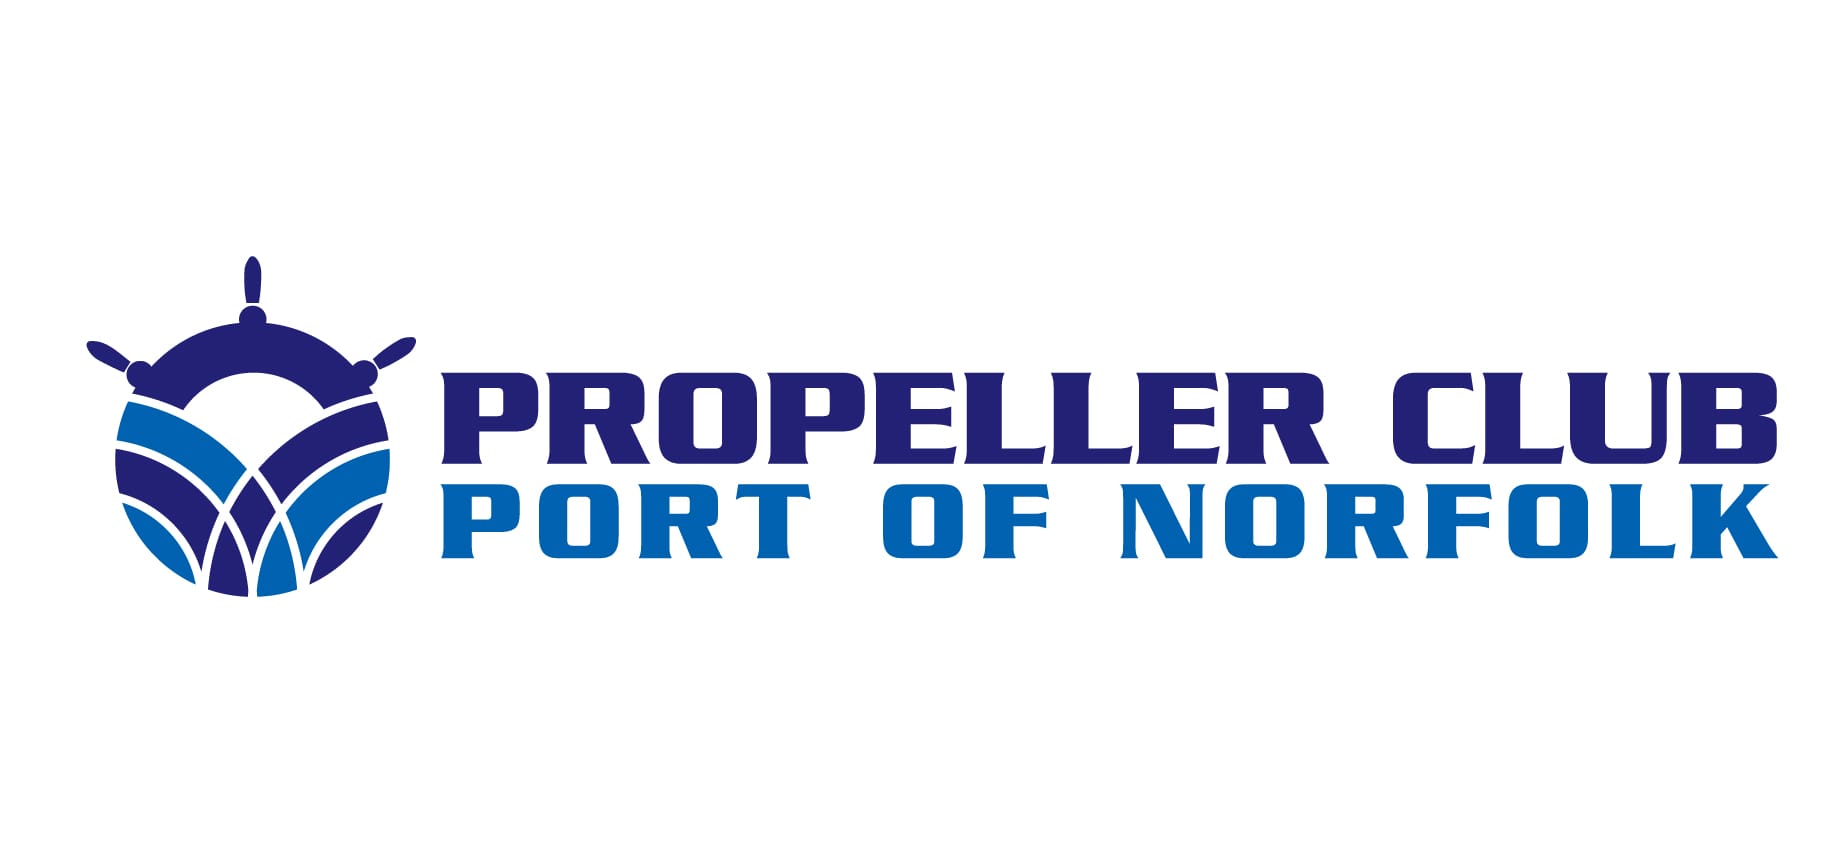 Propeller Club Port of Norfolk.jpg